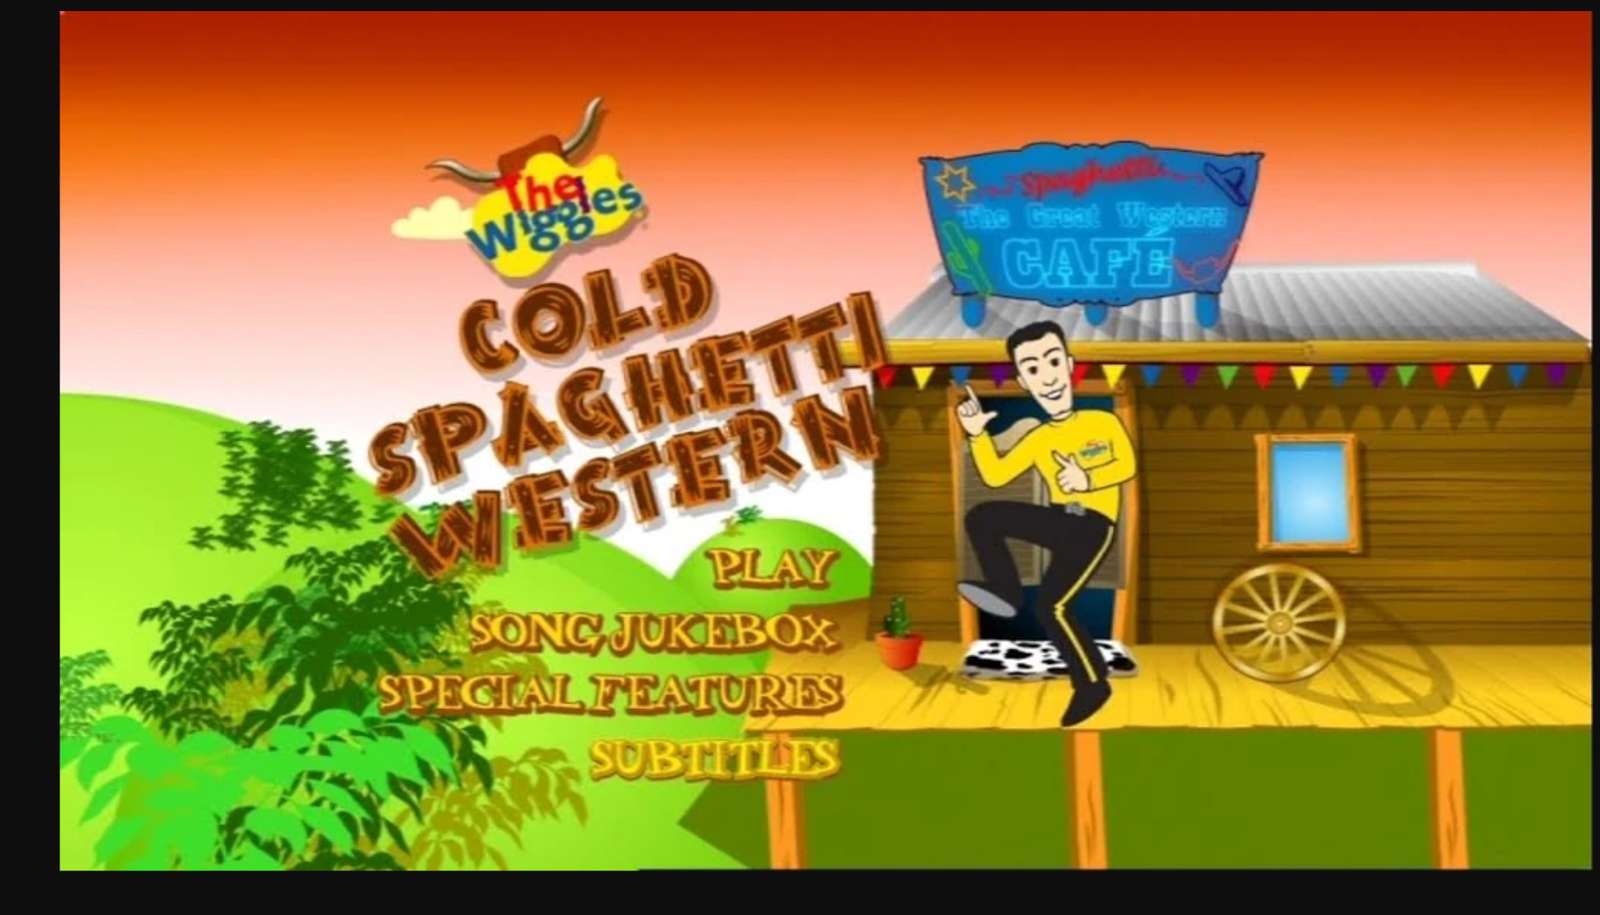 Menú de DVD Cold Spaghetti Western Wiggles 2004 rompecabezas en línea